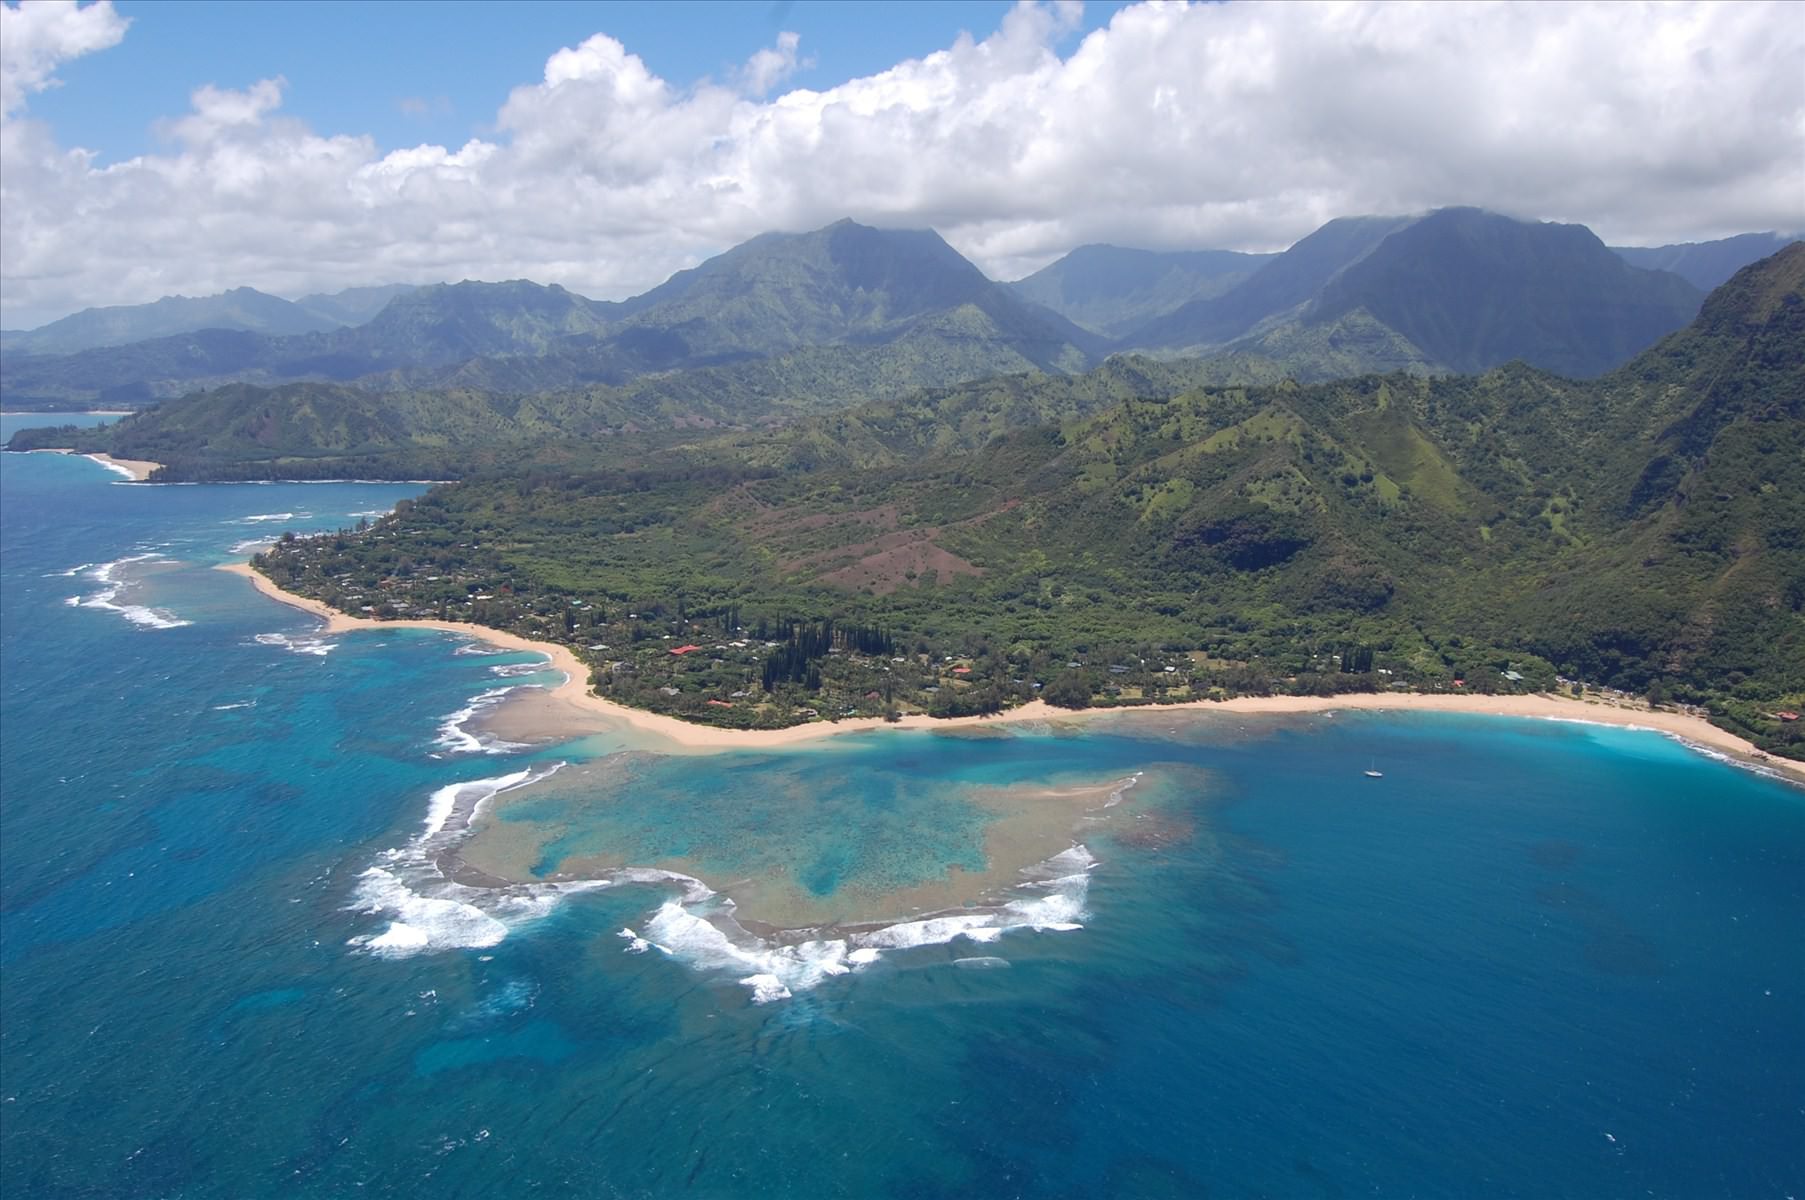 Helicopter tour over Kauai during Cruise of Hawaiian Islands